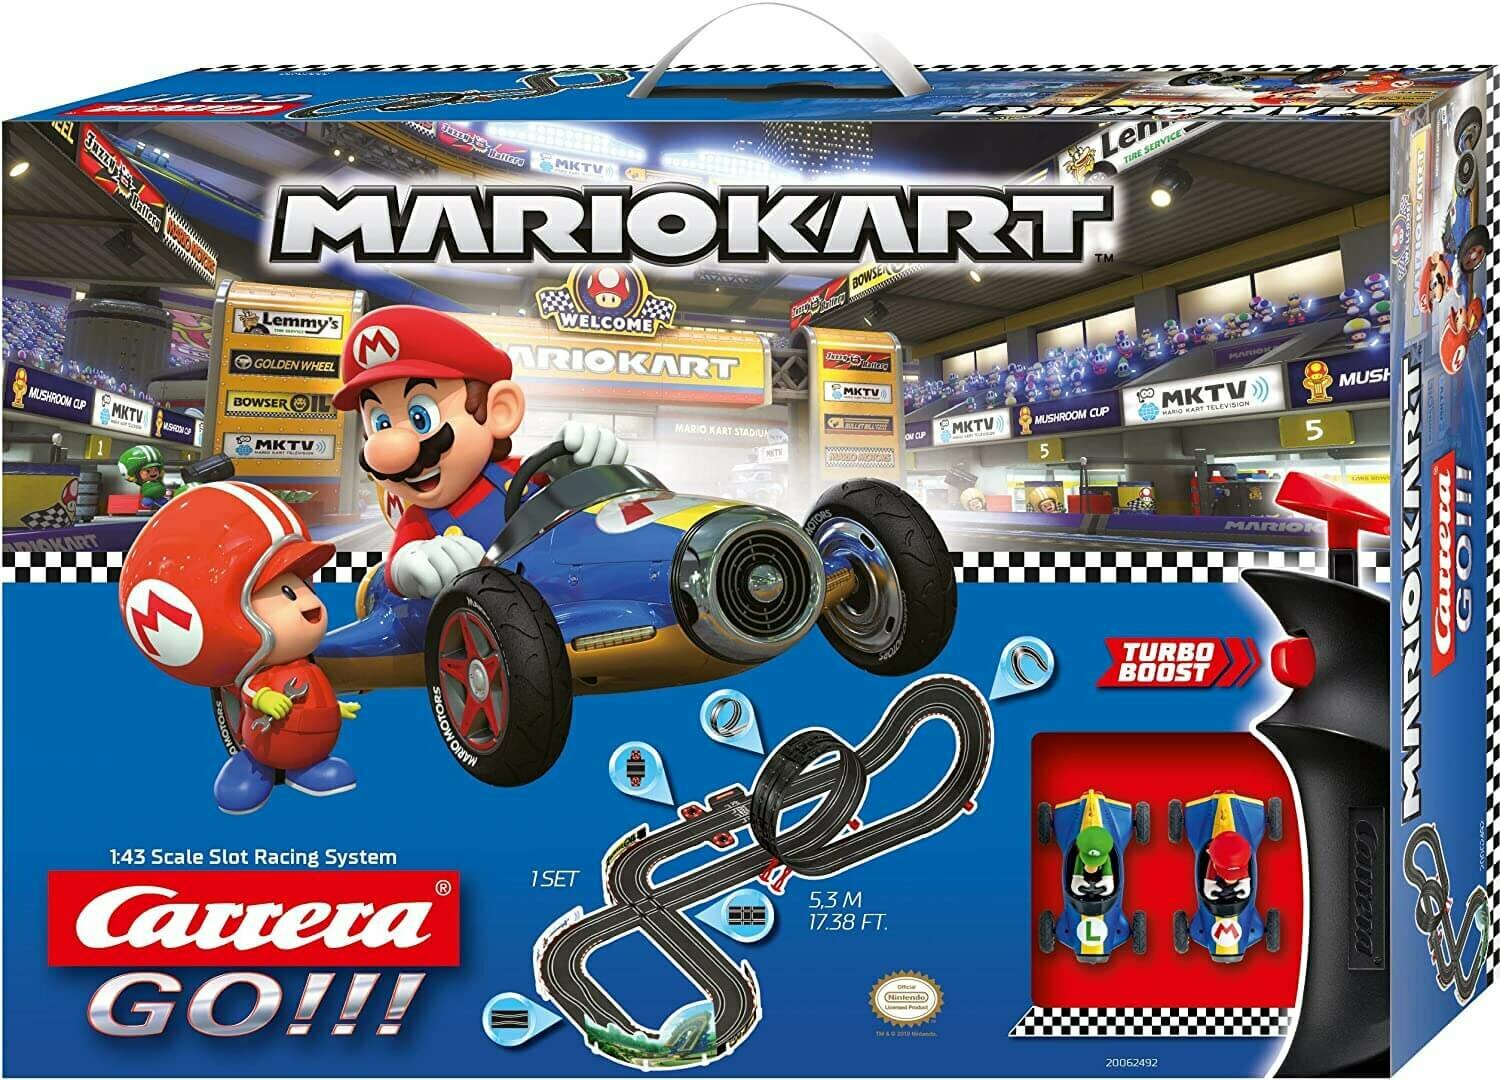 Трек Carrera Go!!! "Nintendo Mario Kart Mach 8" 20062492